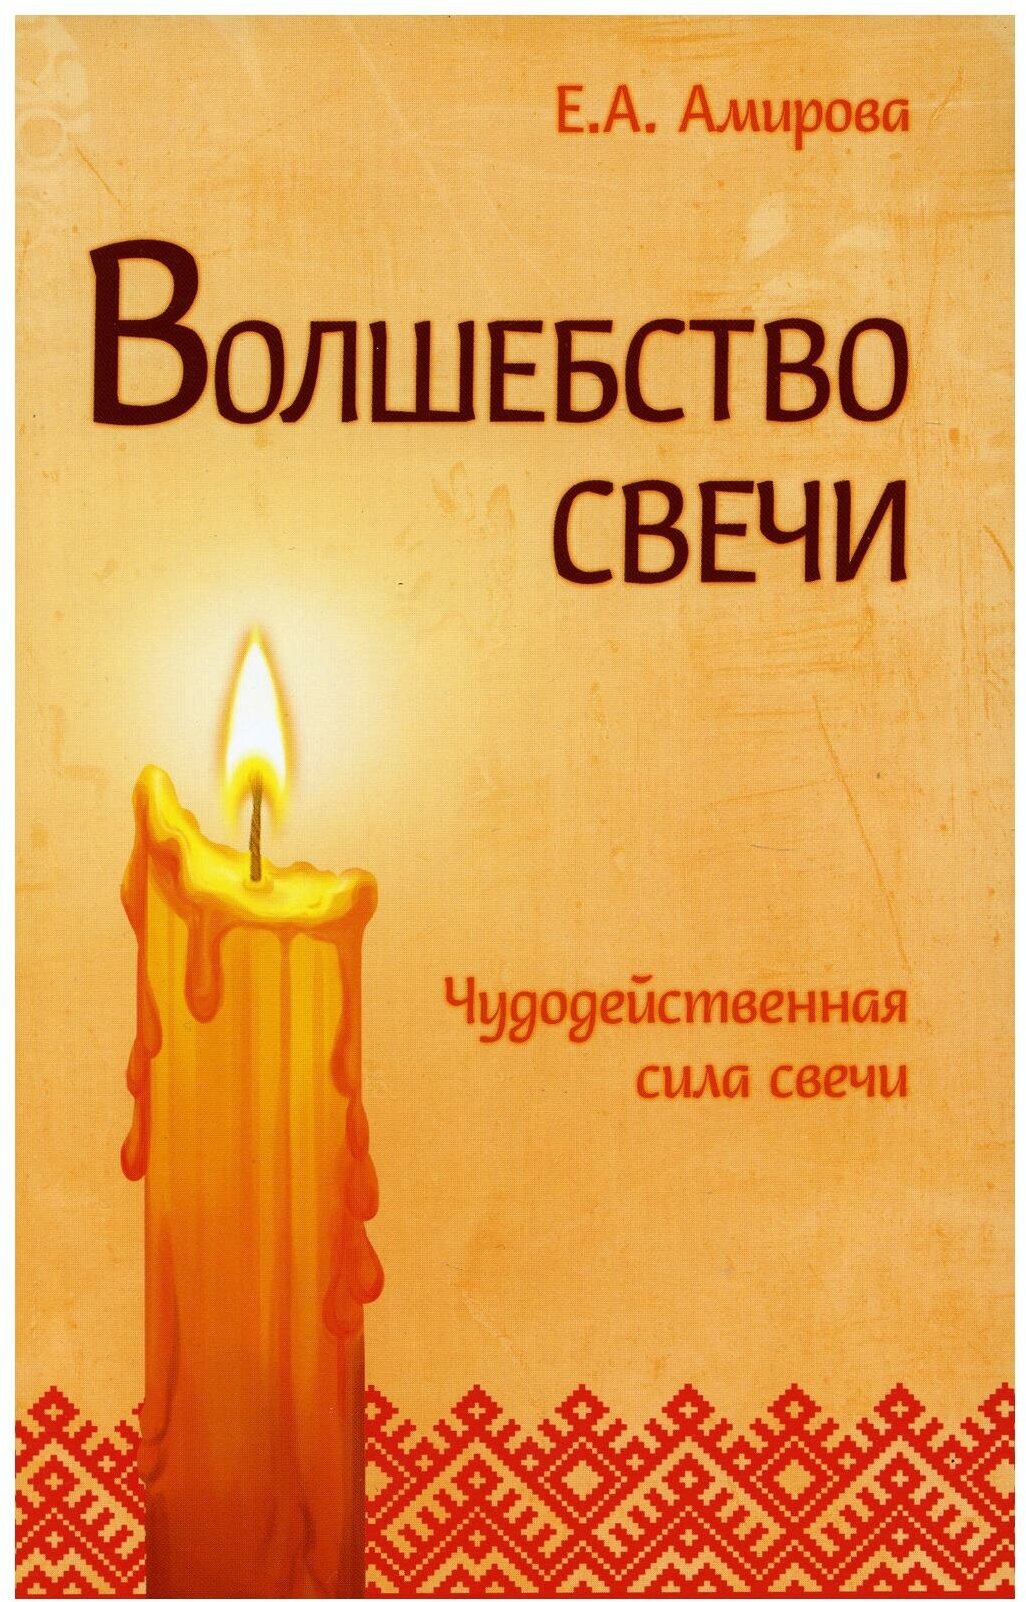 Волшебство свечи. Чудодейственная сила свечи. 3-е изд. Амирова Е. А. Амрита-Русь